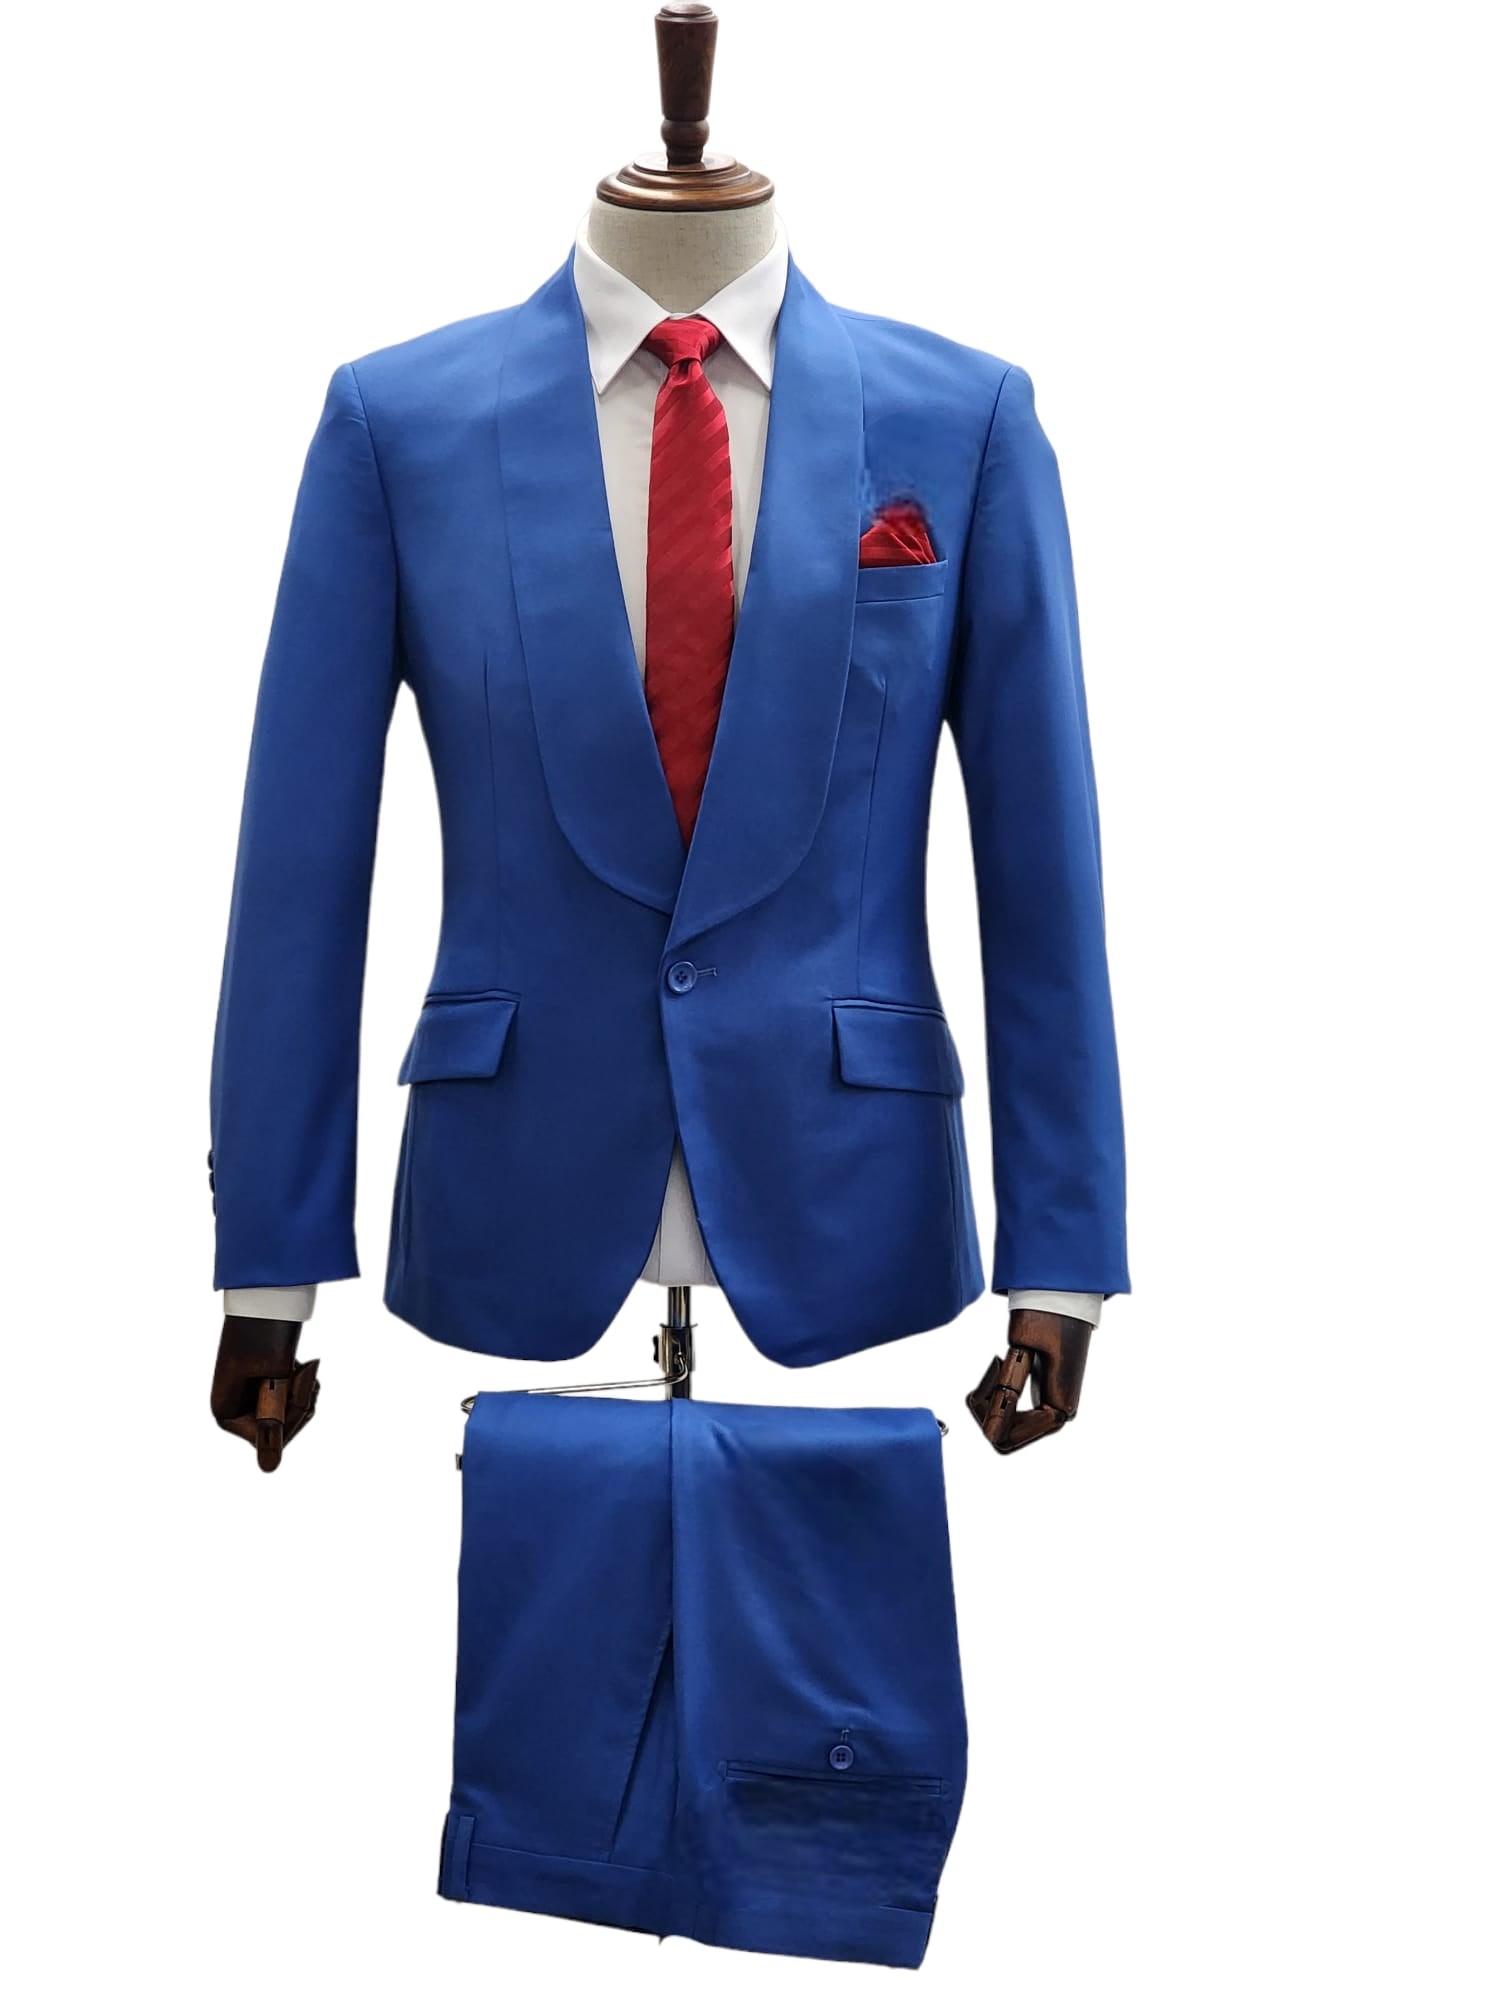 Buy WULFUL Men's Suit Slim Fit One Button 3-Piece Suit Blazer Dress  Business Wedding Party Jacket Vest & Pants Dark Grey at Amazon.in